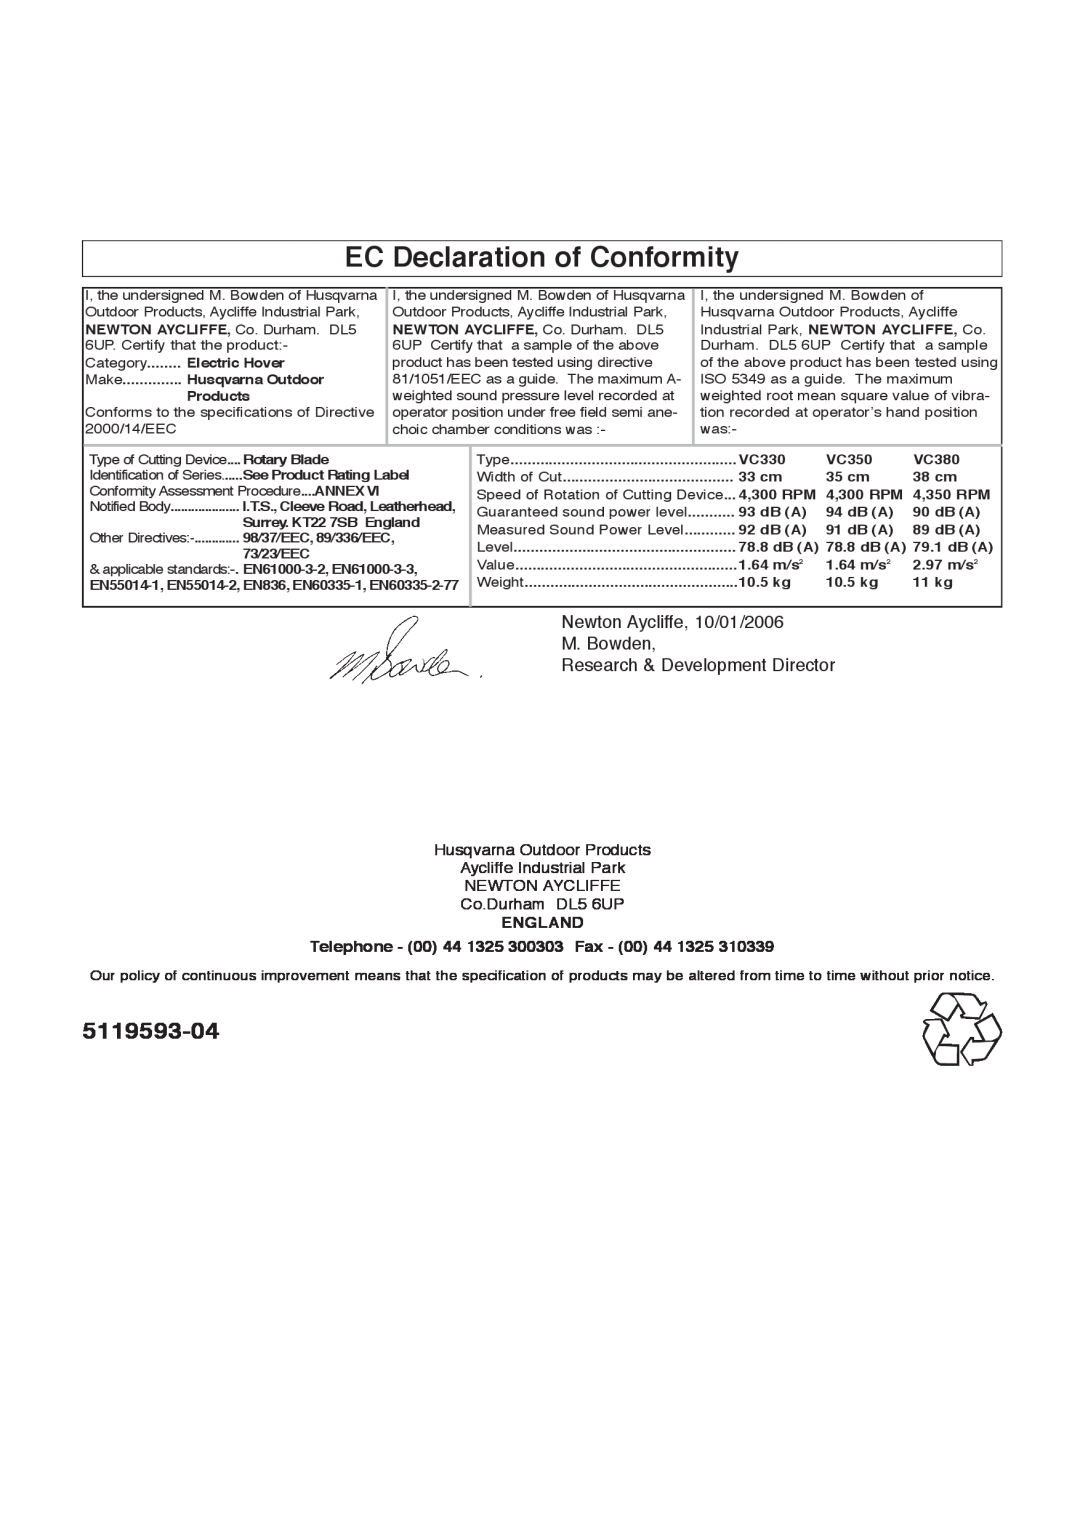 Flymo 380 EC Declaration of Conformity, 5119593-04, Newton Aycliffe, 10/01/2006 M. Bowden, Research & Development Director 